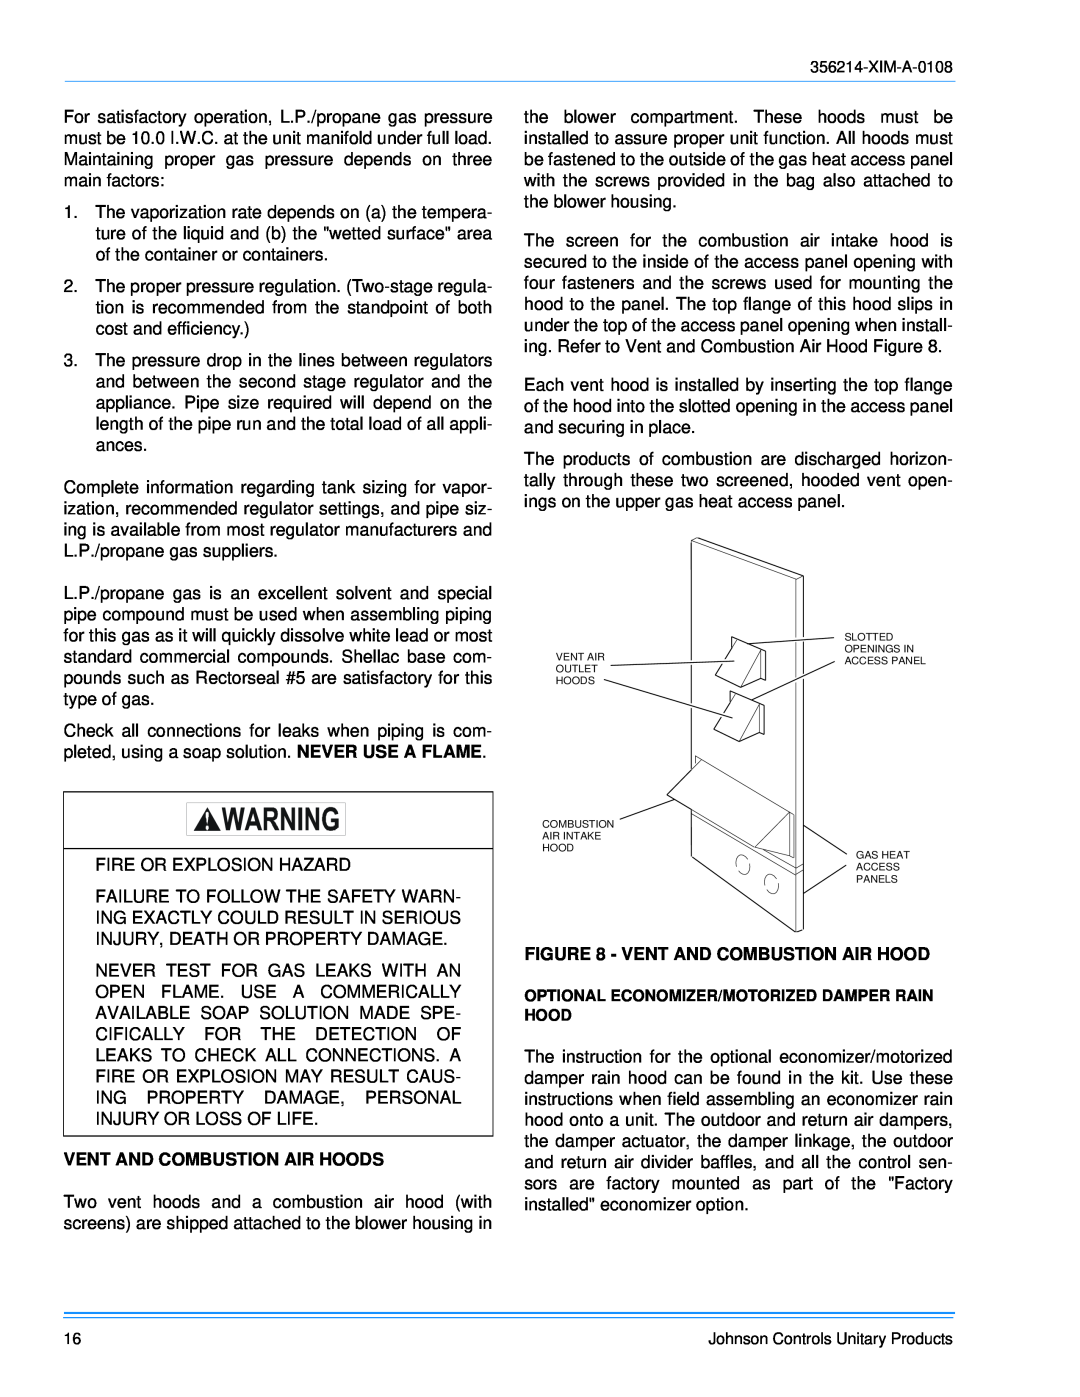 Sunlife Enterprises DM240, DM300, DM180 installation manual Vent And Combustion Air Hoods 